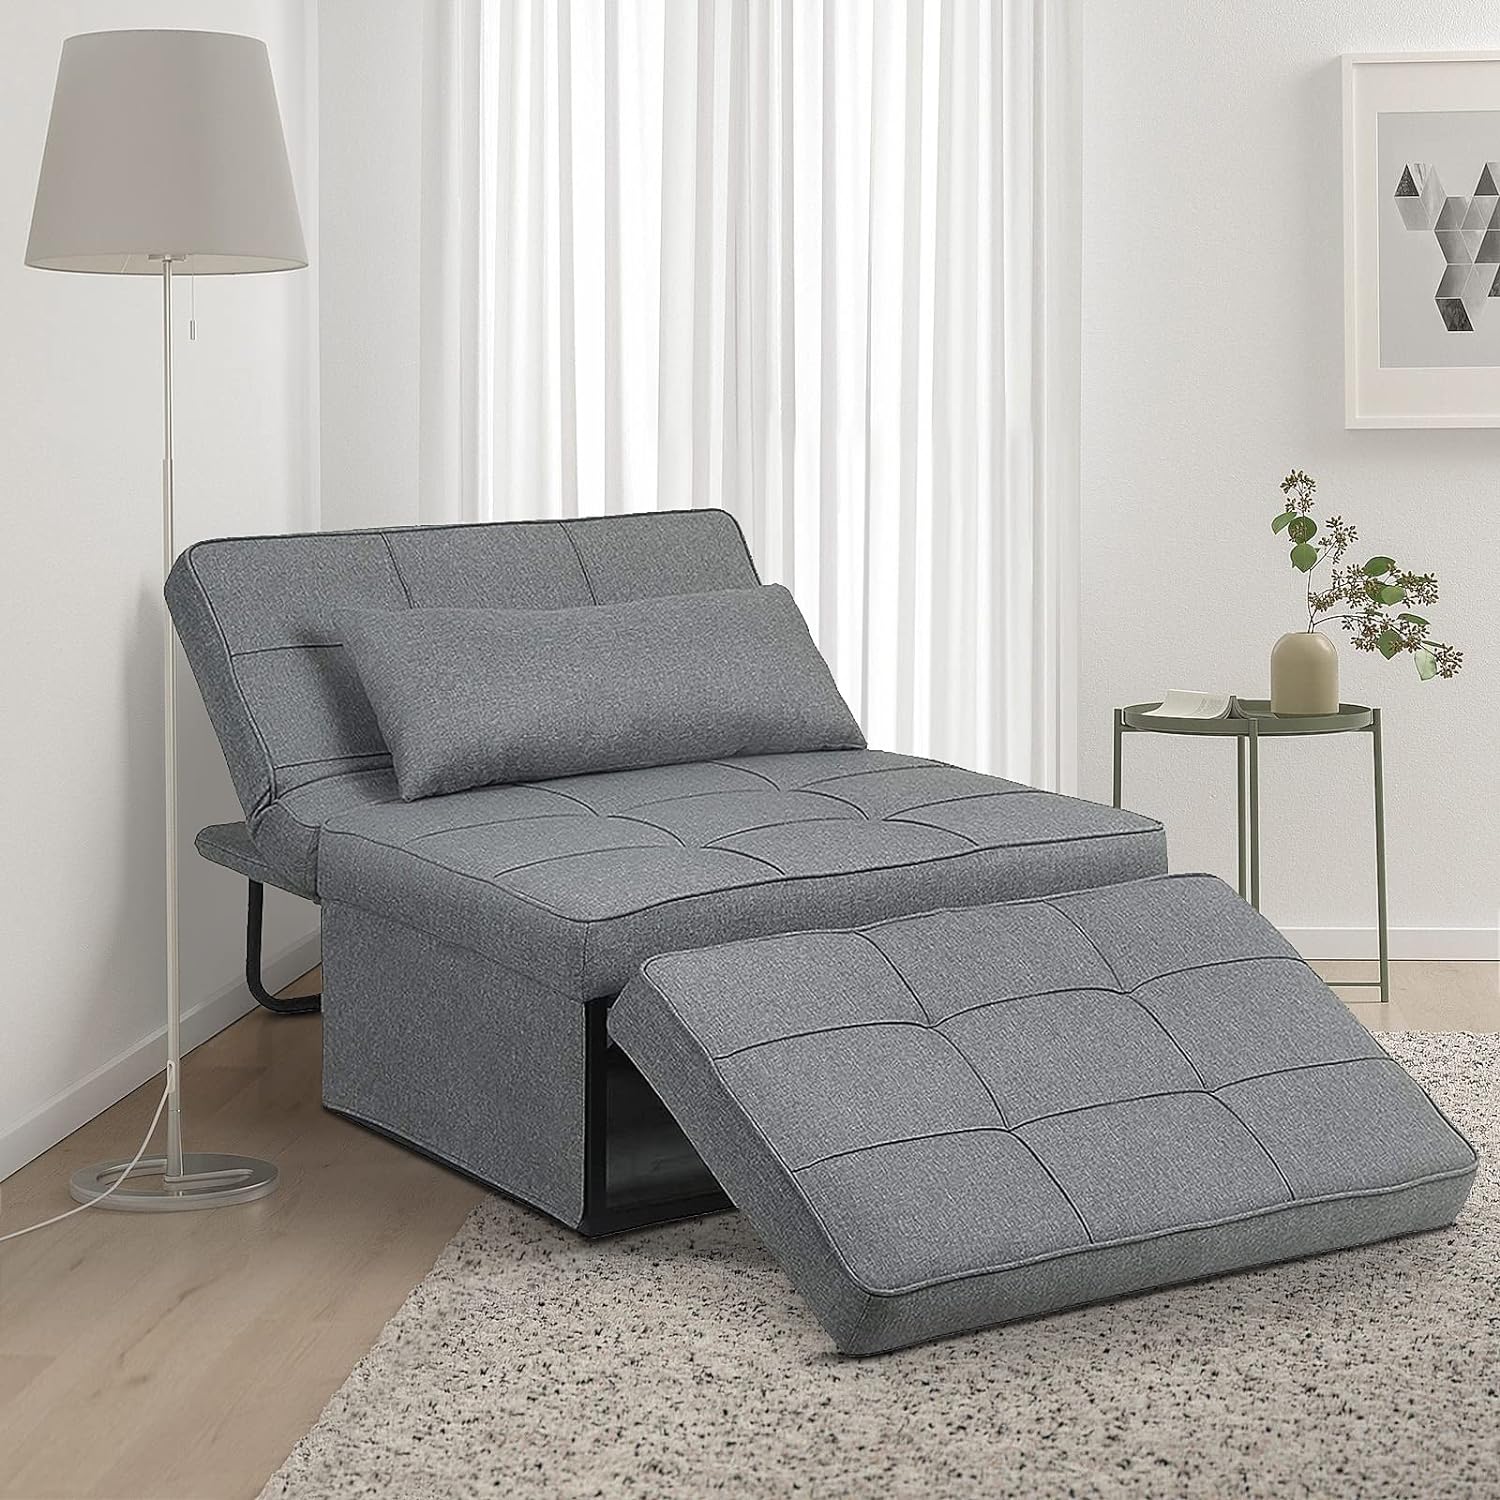 Saemoza Sofa Bed, 4 in 1 Multi Function Single Folding Ottoman Bed, Modern  Sleep